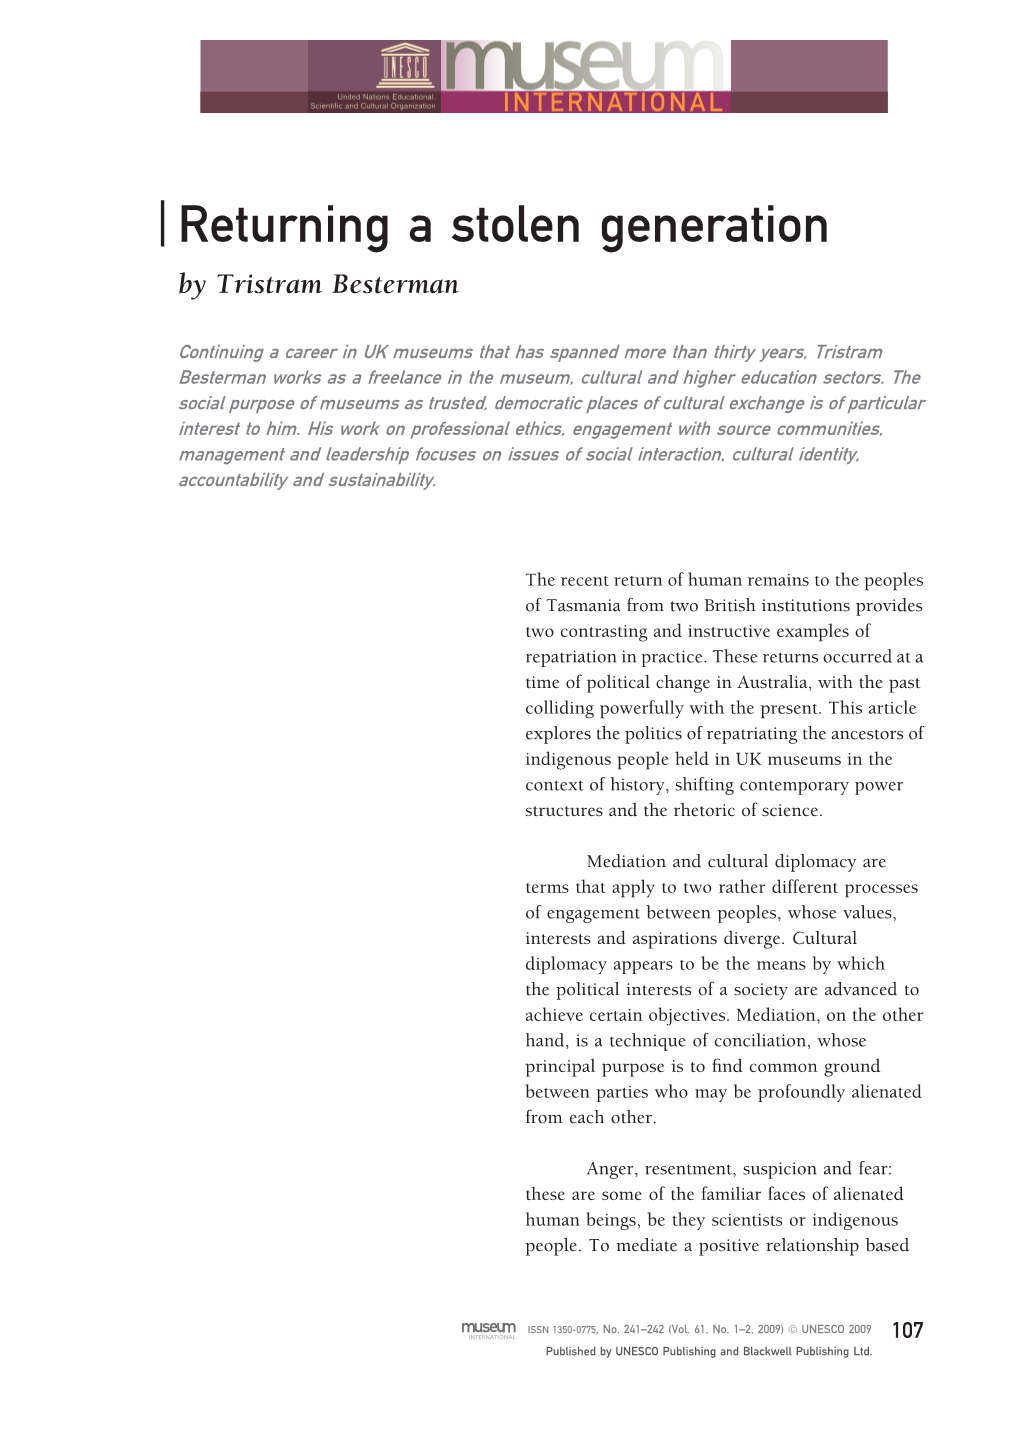 Returning a Stolen Generation by Tristram Besterman